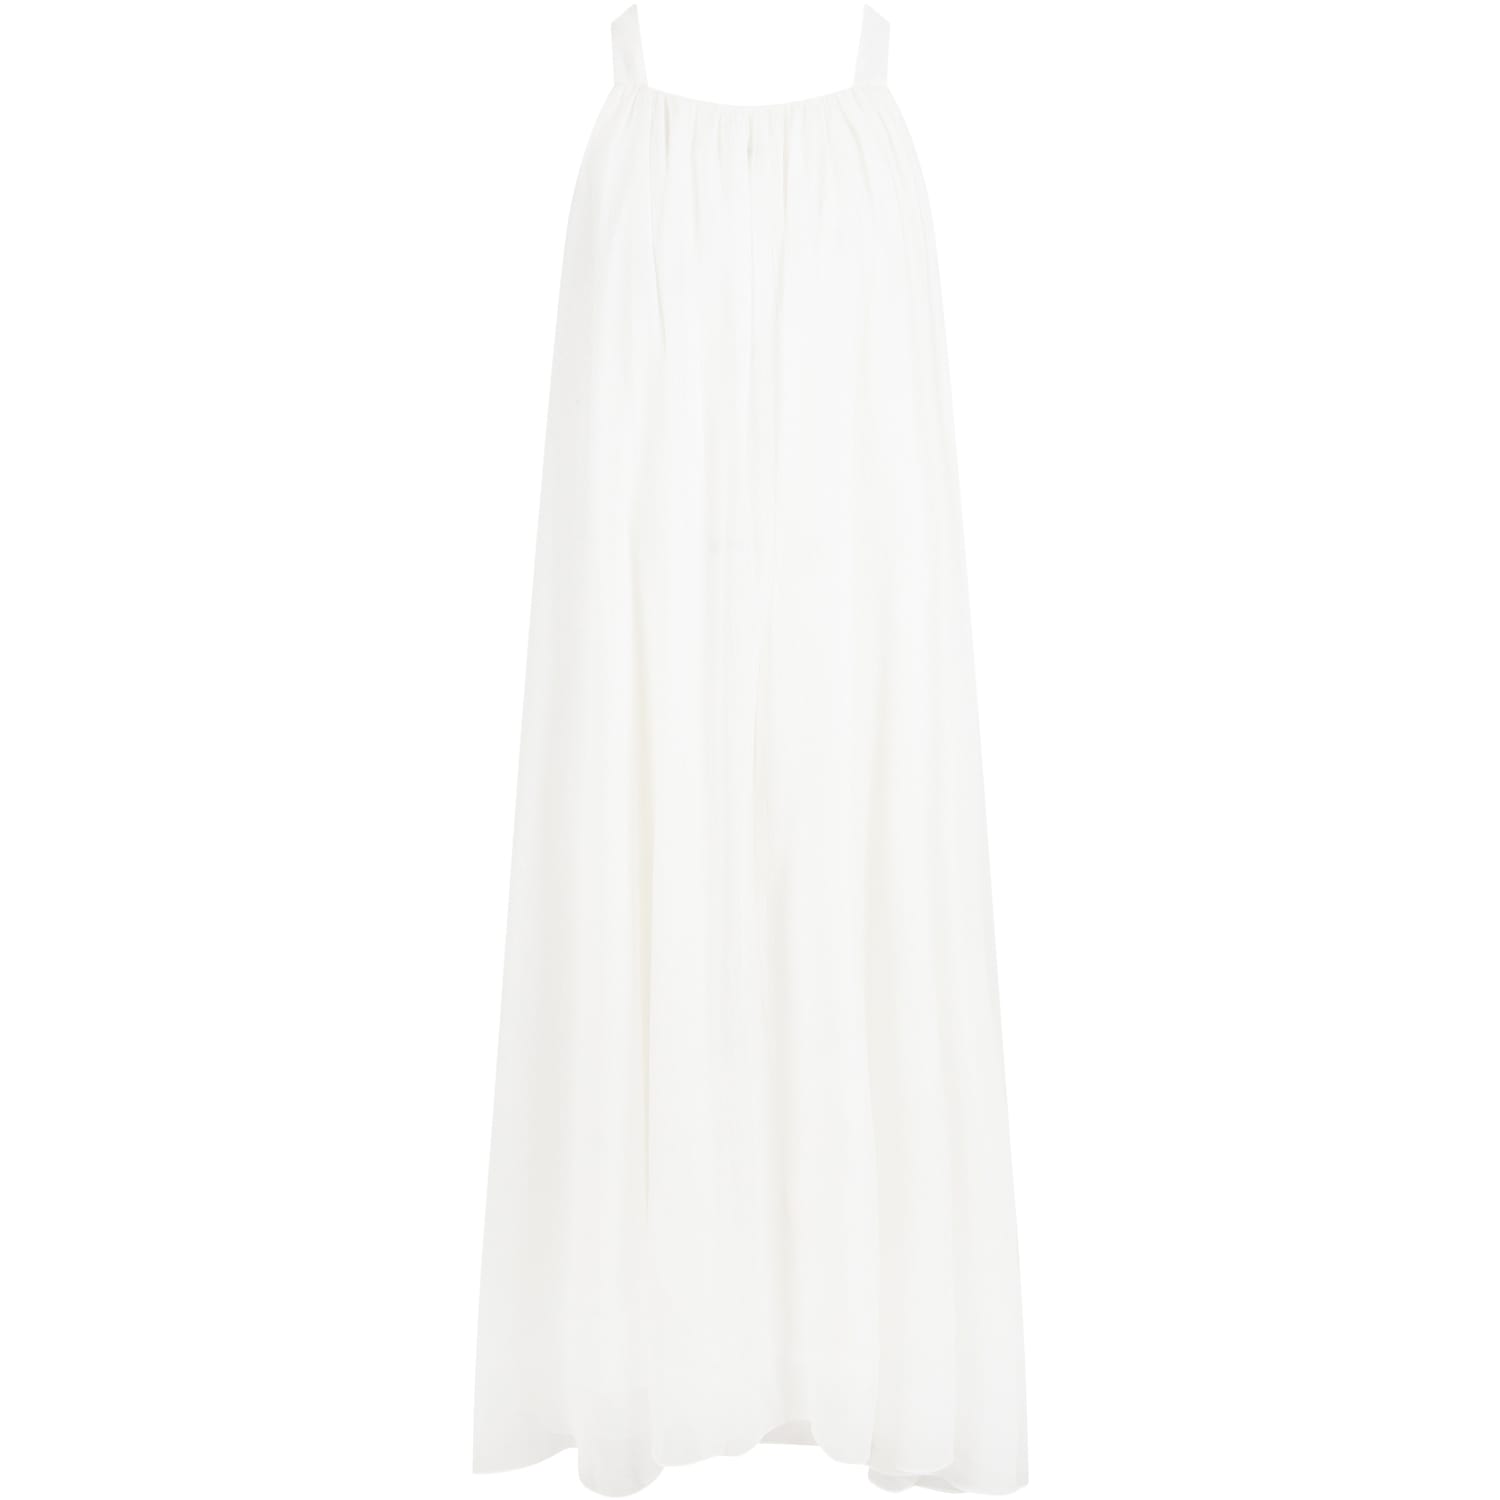 Le Gemelline by Feleppa White Dress For Girl